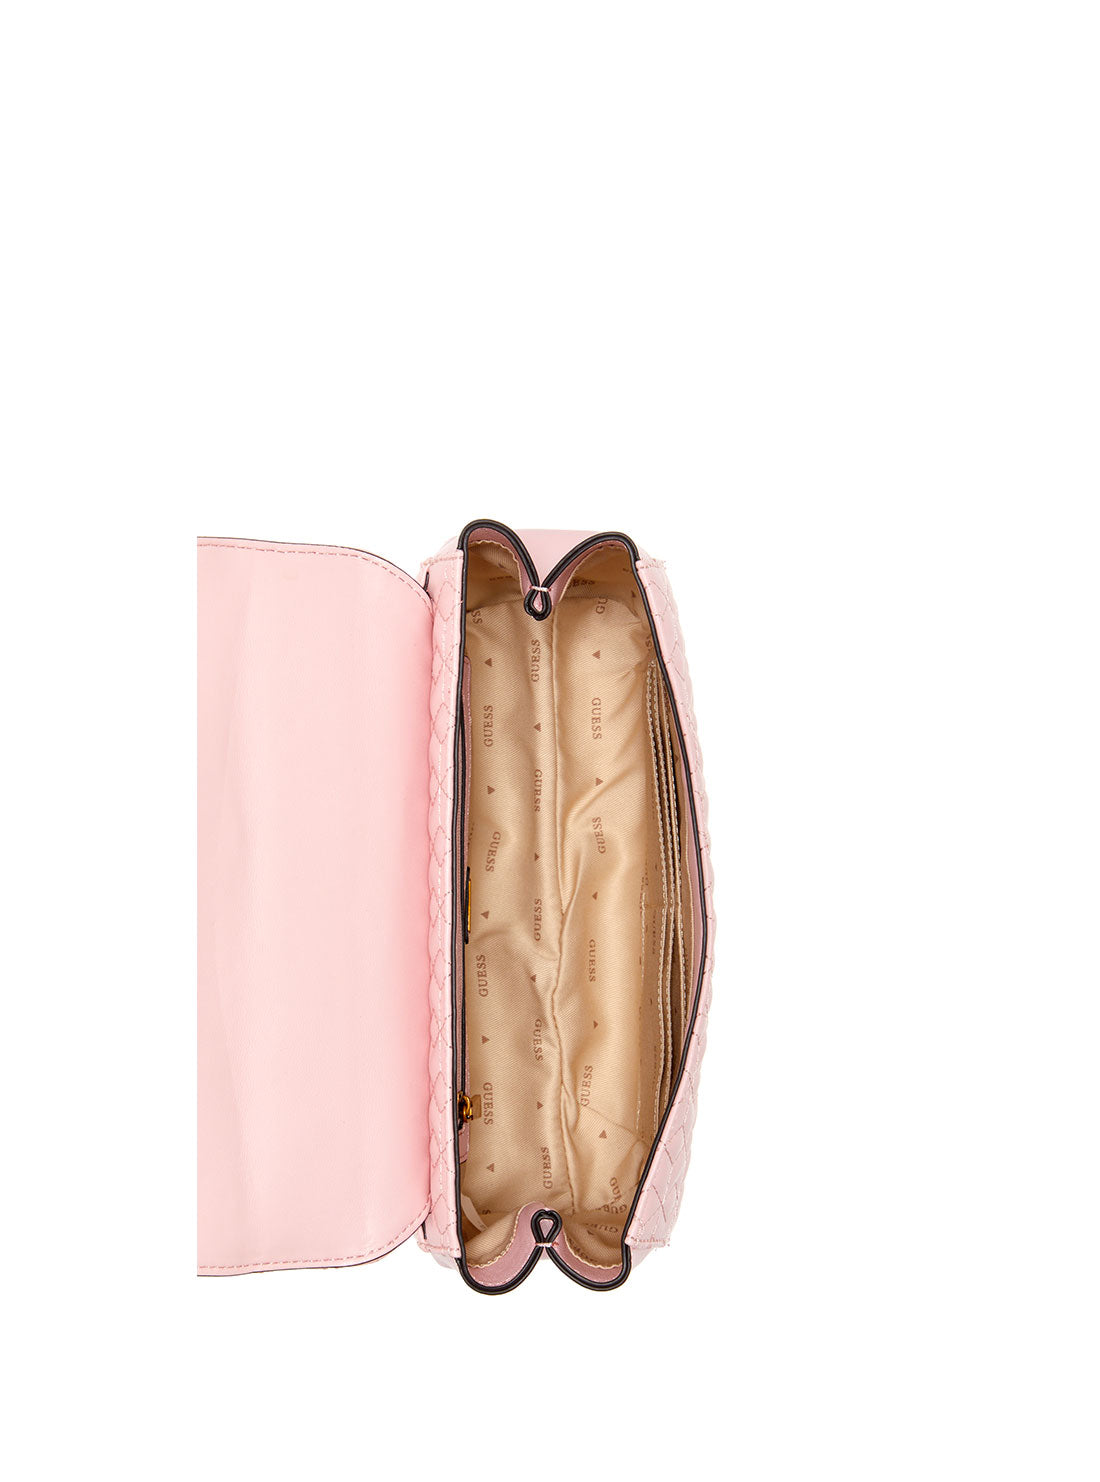 GUESS Women's Pink Katey Shoulder Bag DB787019 Inside View